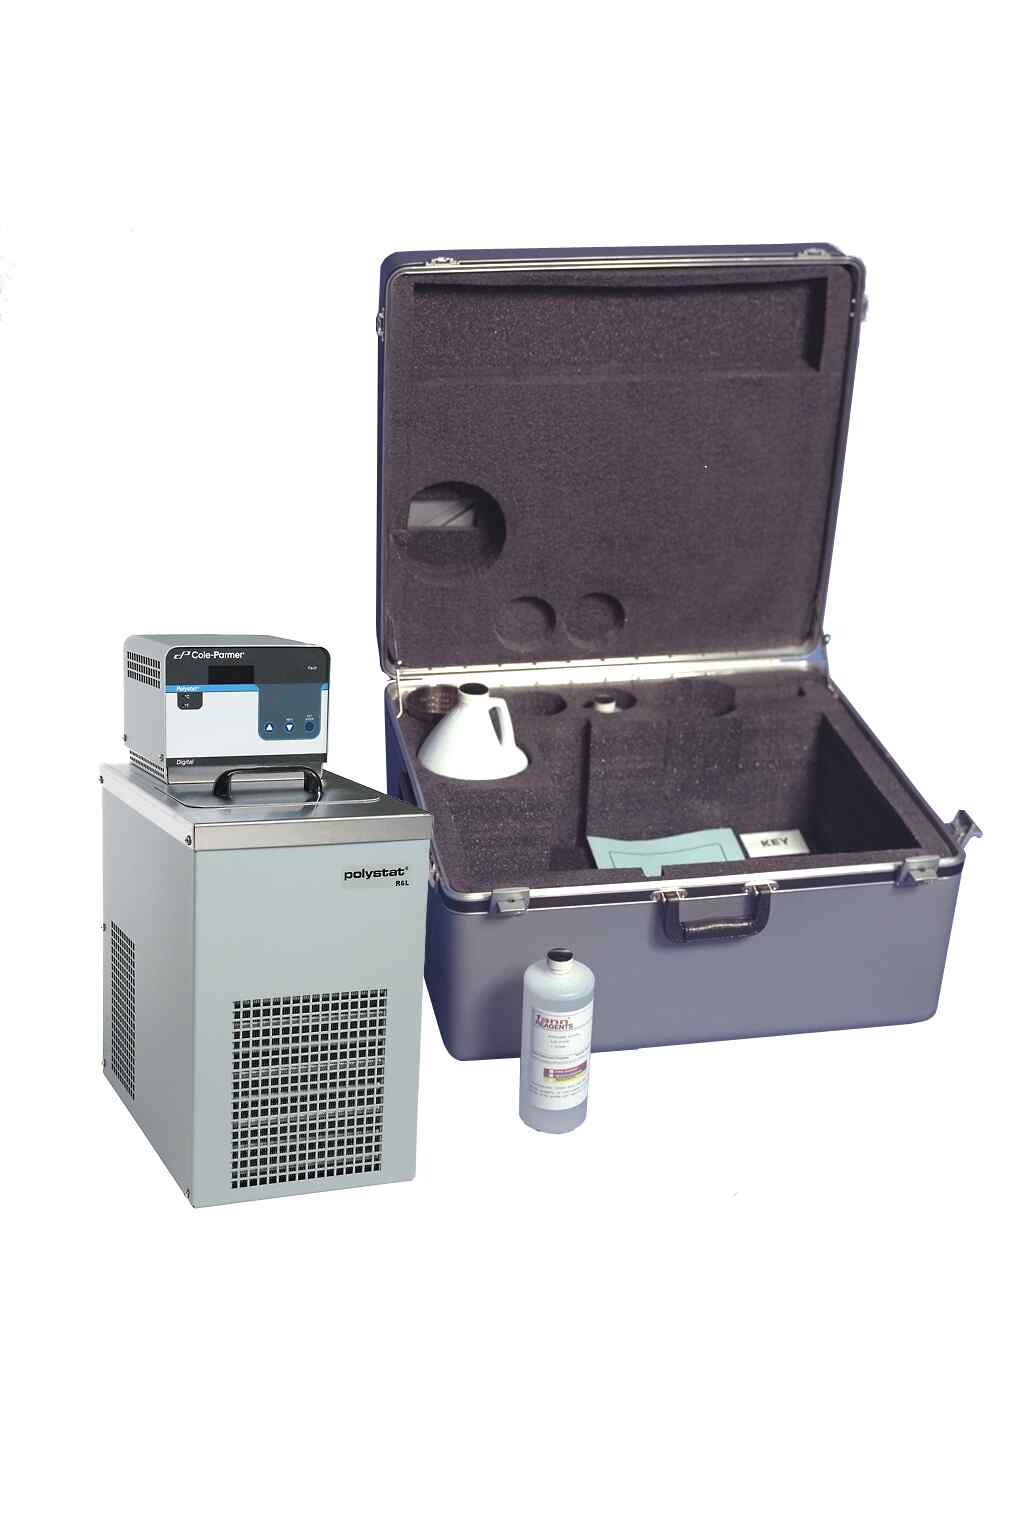 Cold Water Rheology kit